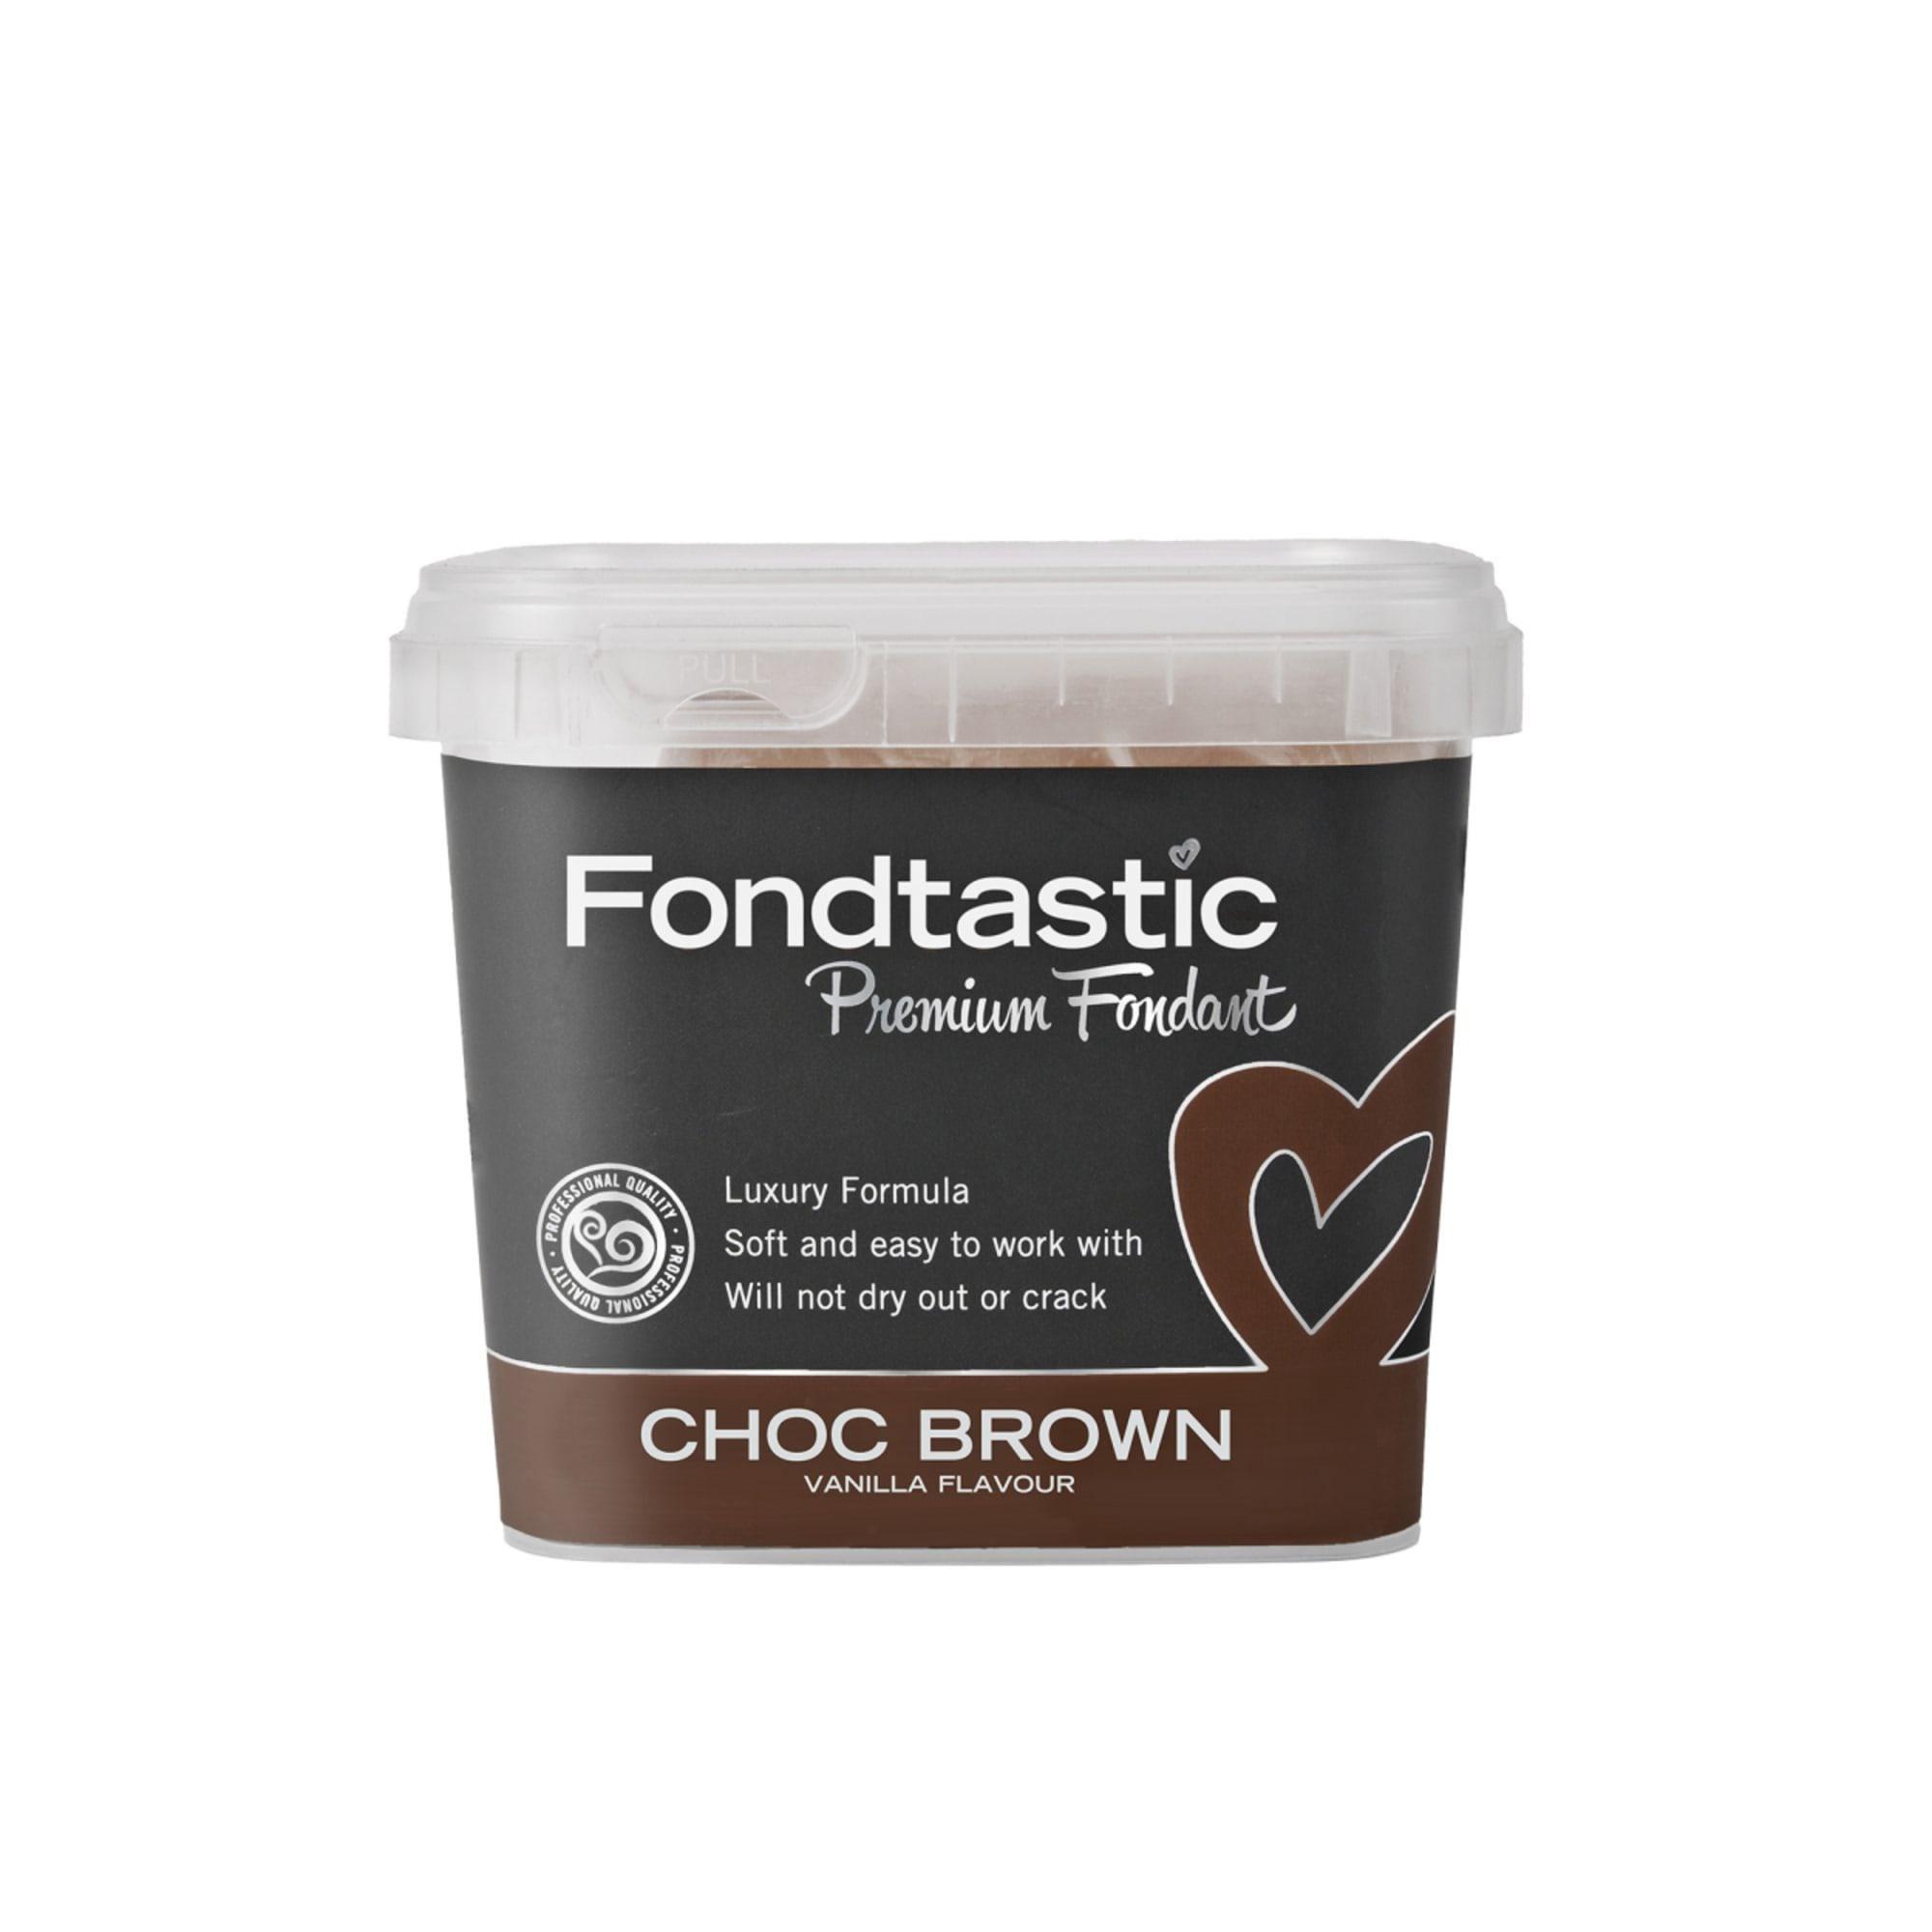 Fondtastic Premium Fondant Choc Brown 1kg Image 1